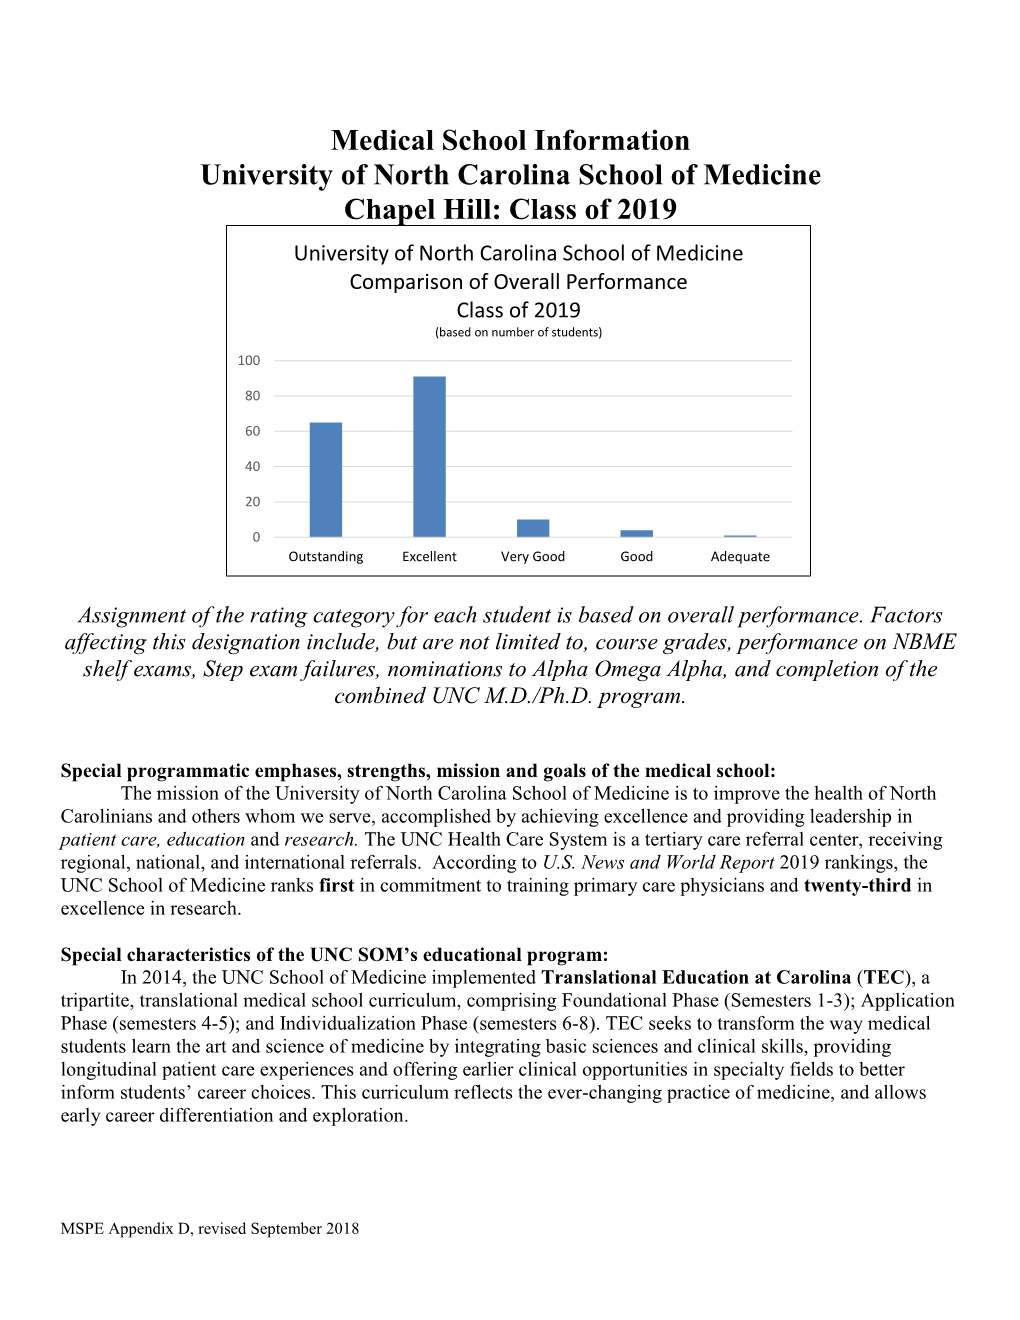 Medical School Information University of North Carolina School of Medicine Chapel Hill: Class of 2019